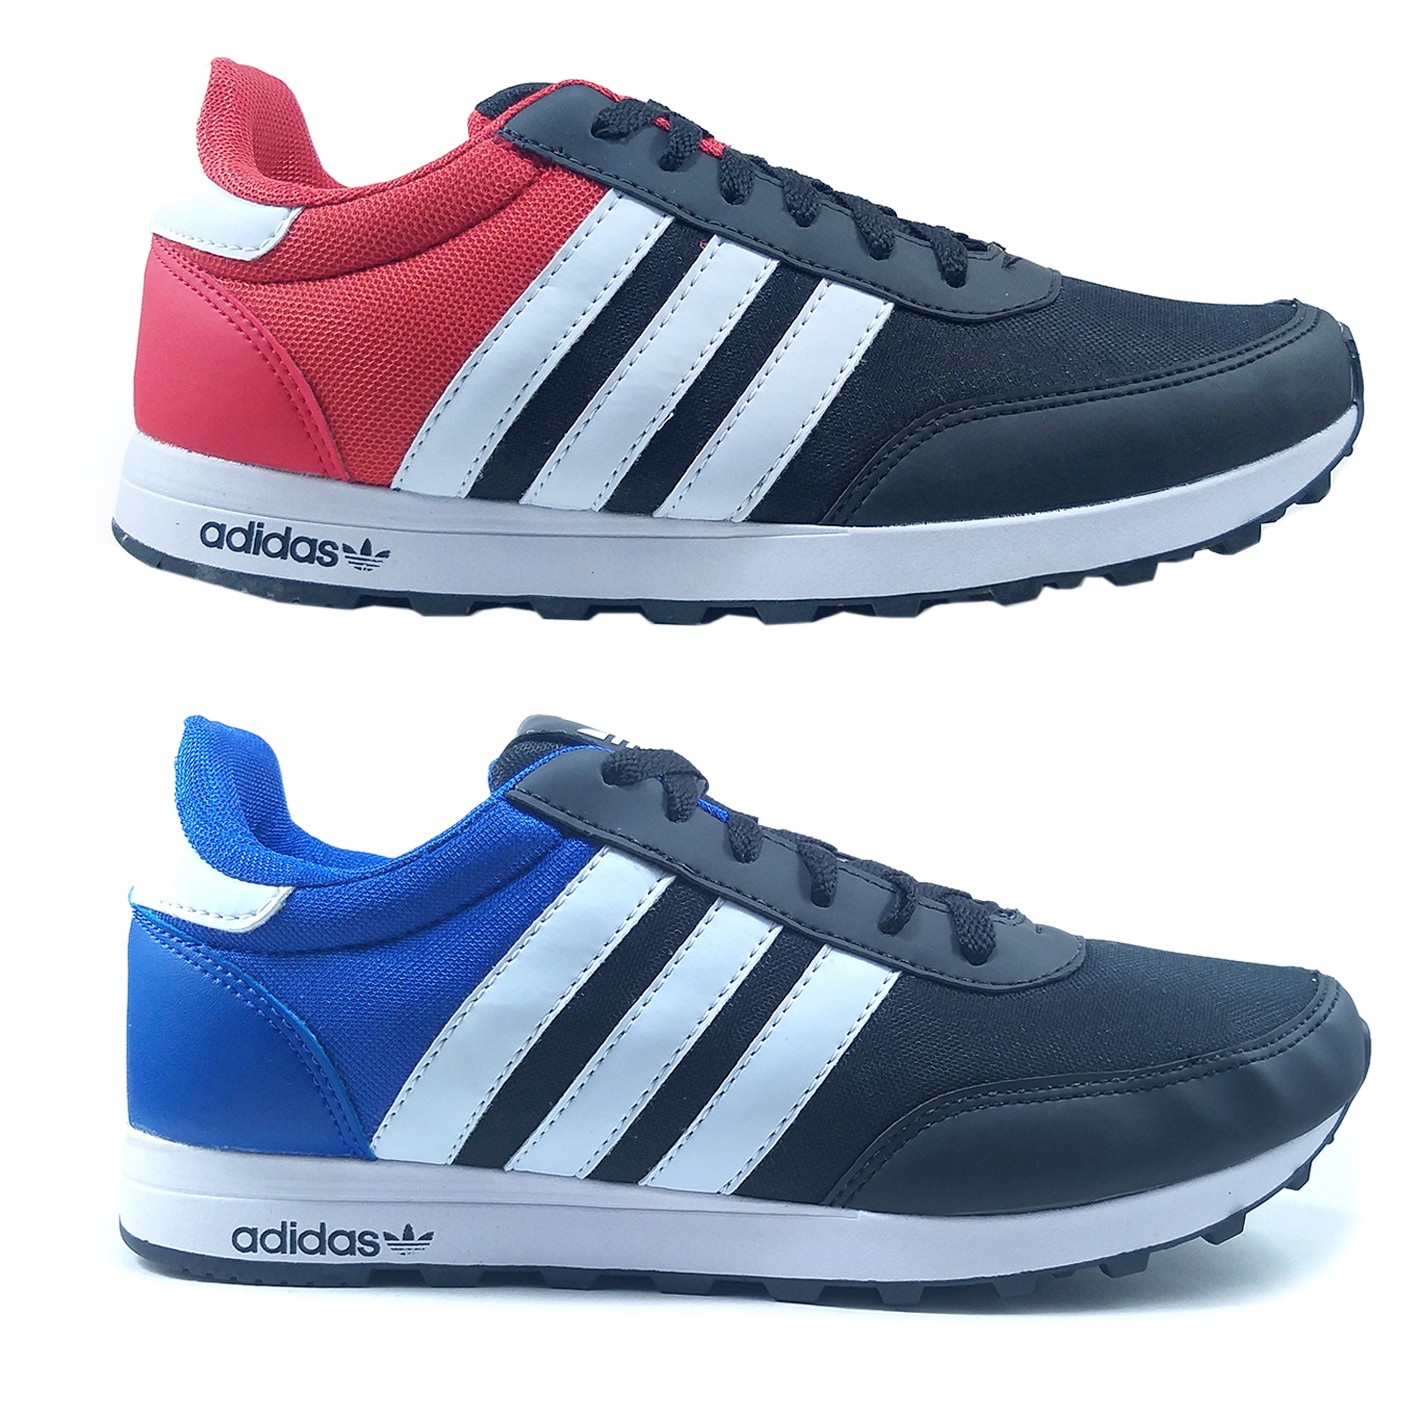 Kit Tênis Adidas Neo Preto - Azul + Tênis Adidas Neo Preto - Vermelho -  Slim Shoes